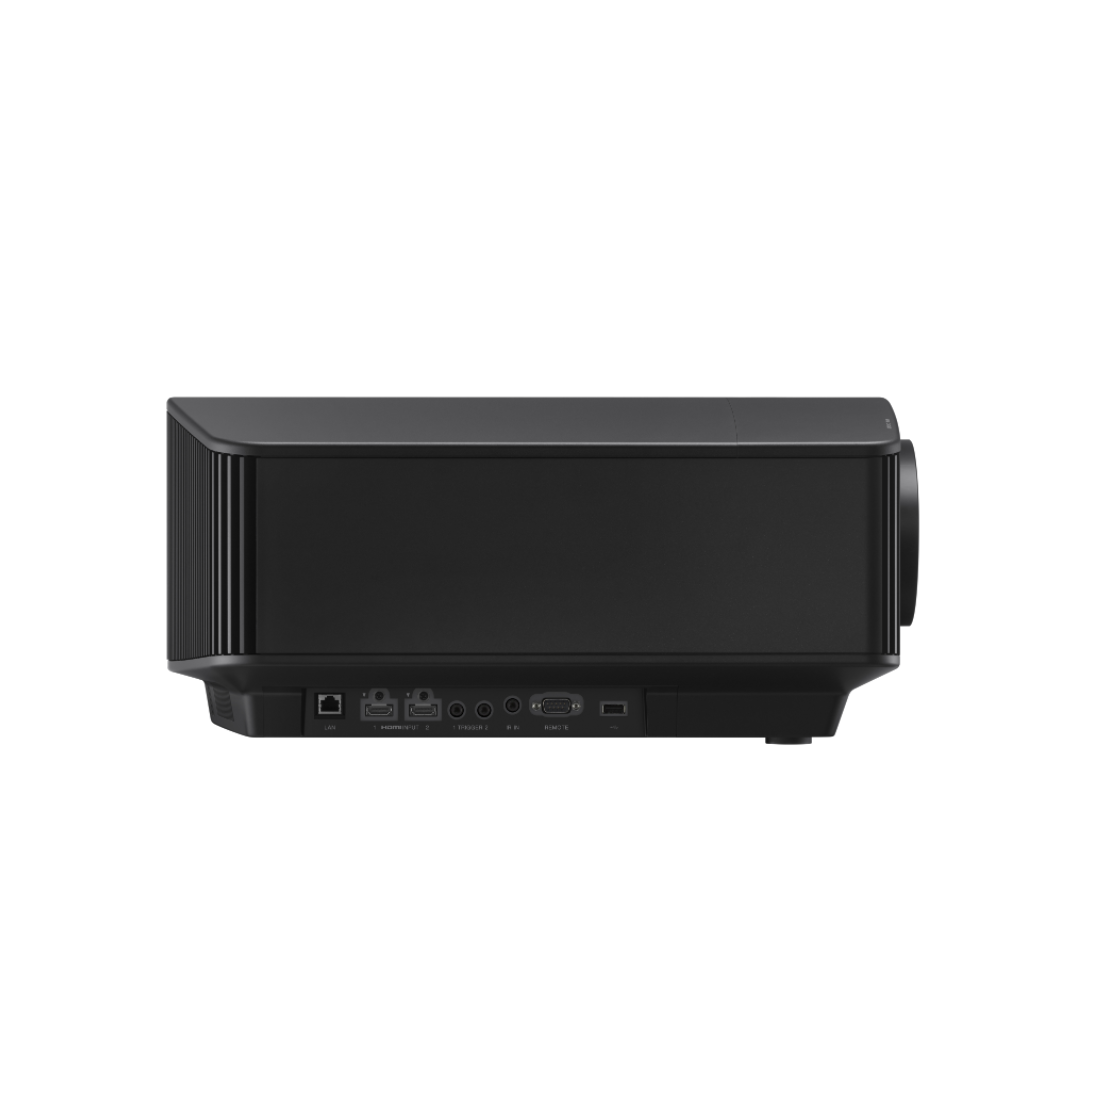 Sony VPL-VW890ES Projector